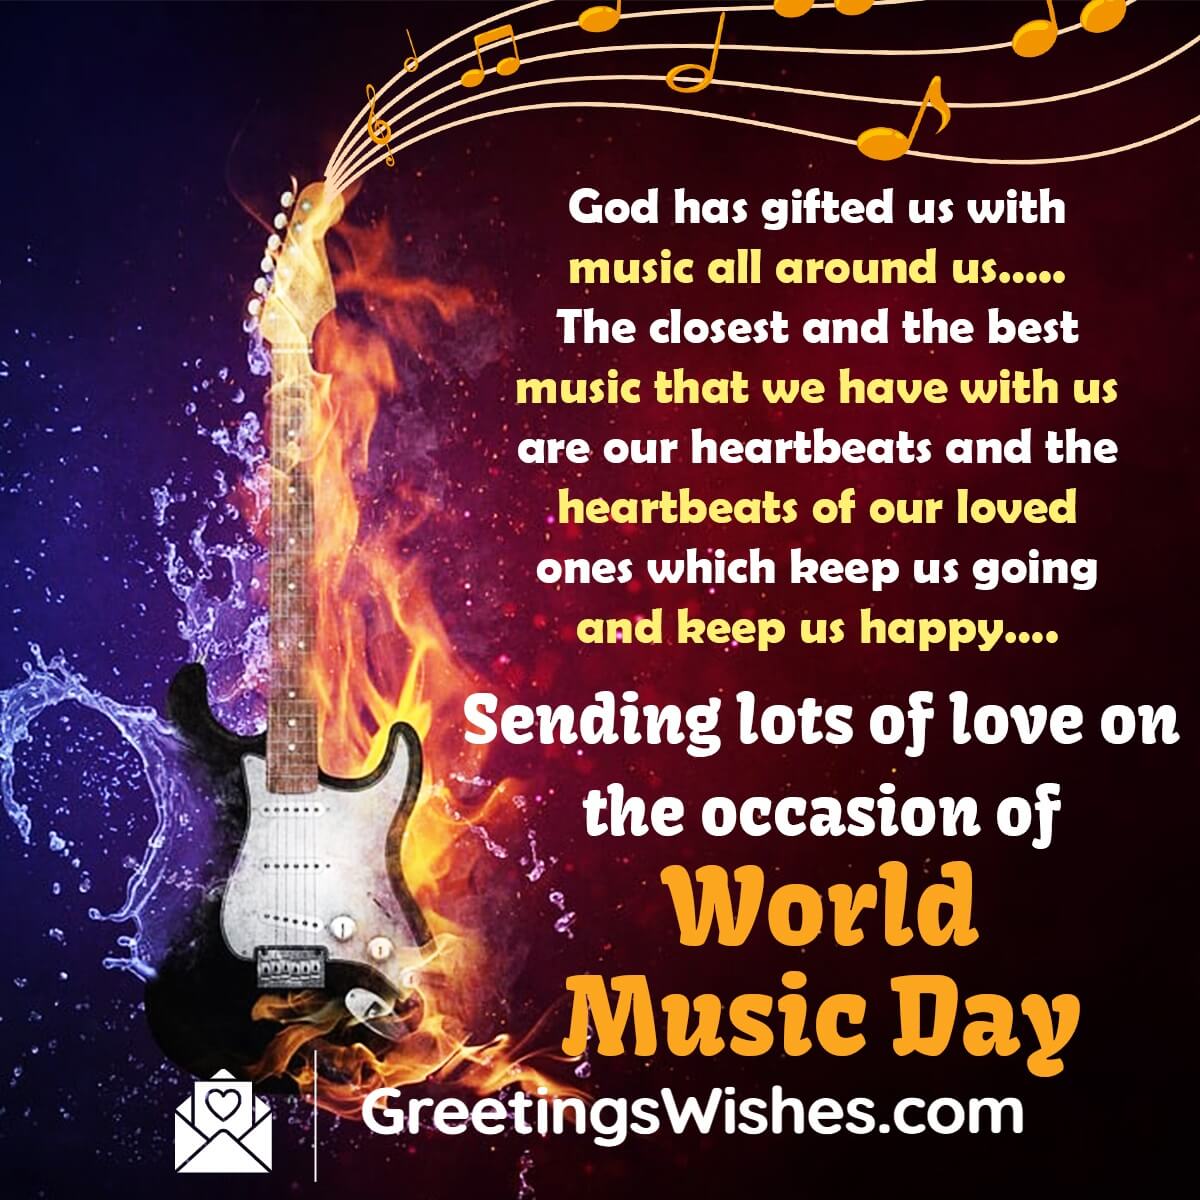 World Music Day Message